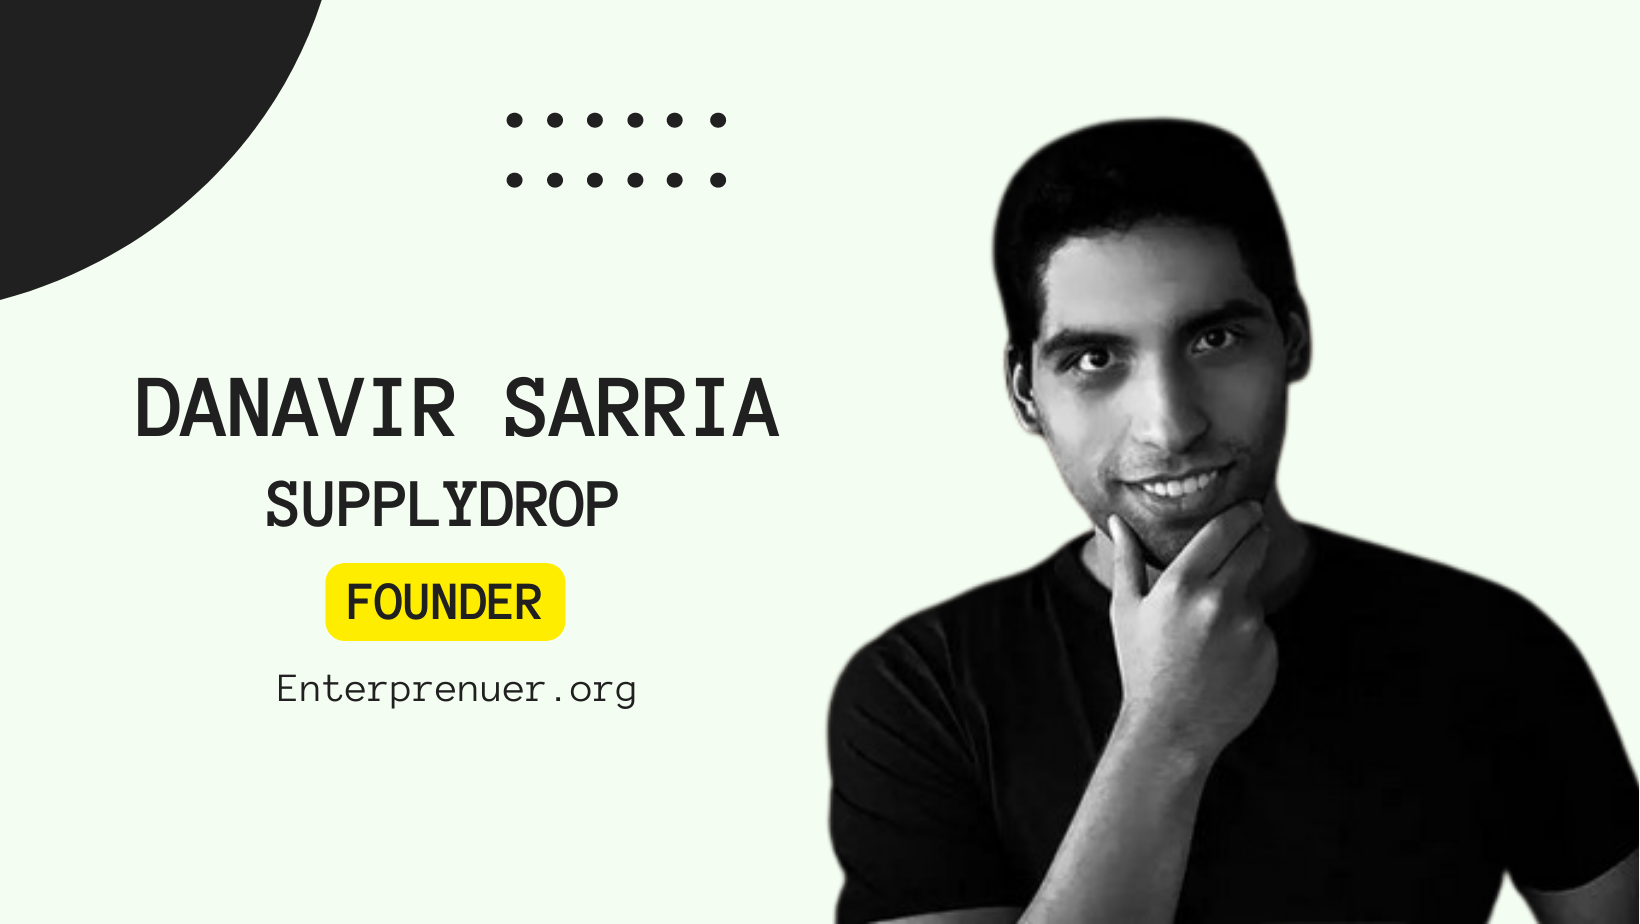 Meet Danavir Sarria Founder of SupplyDrop